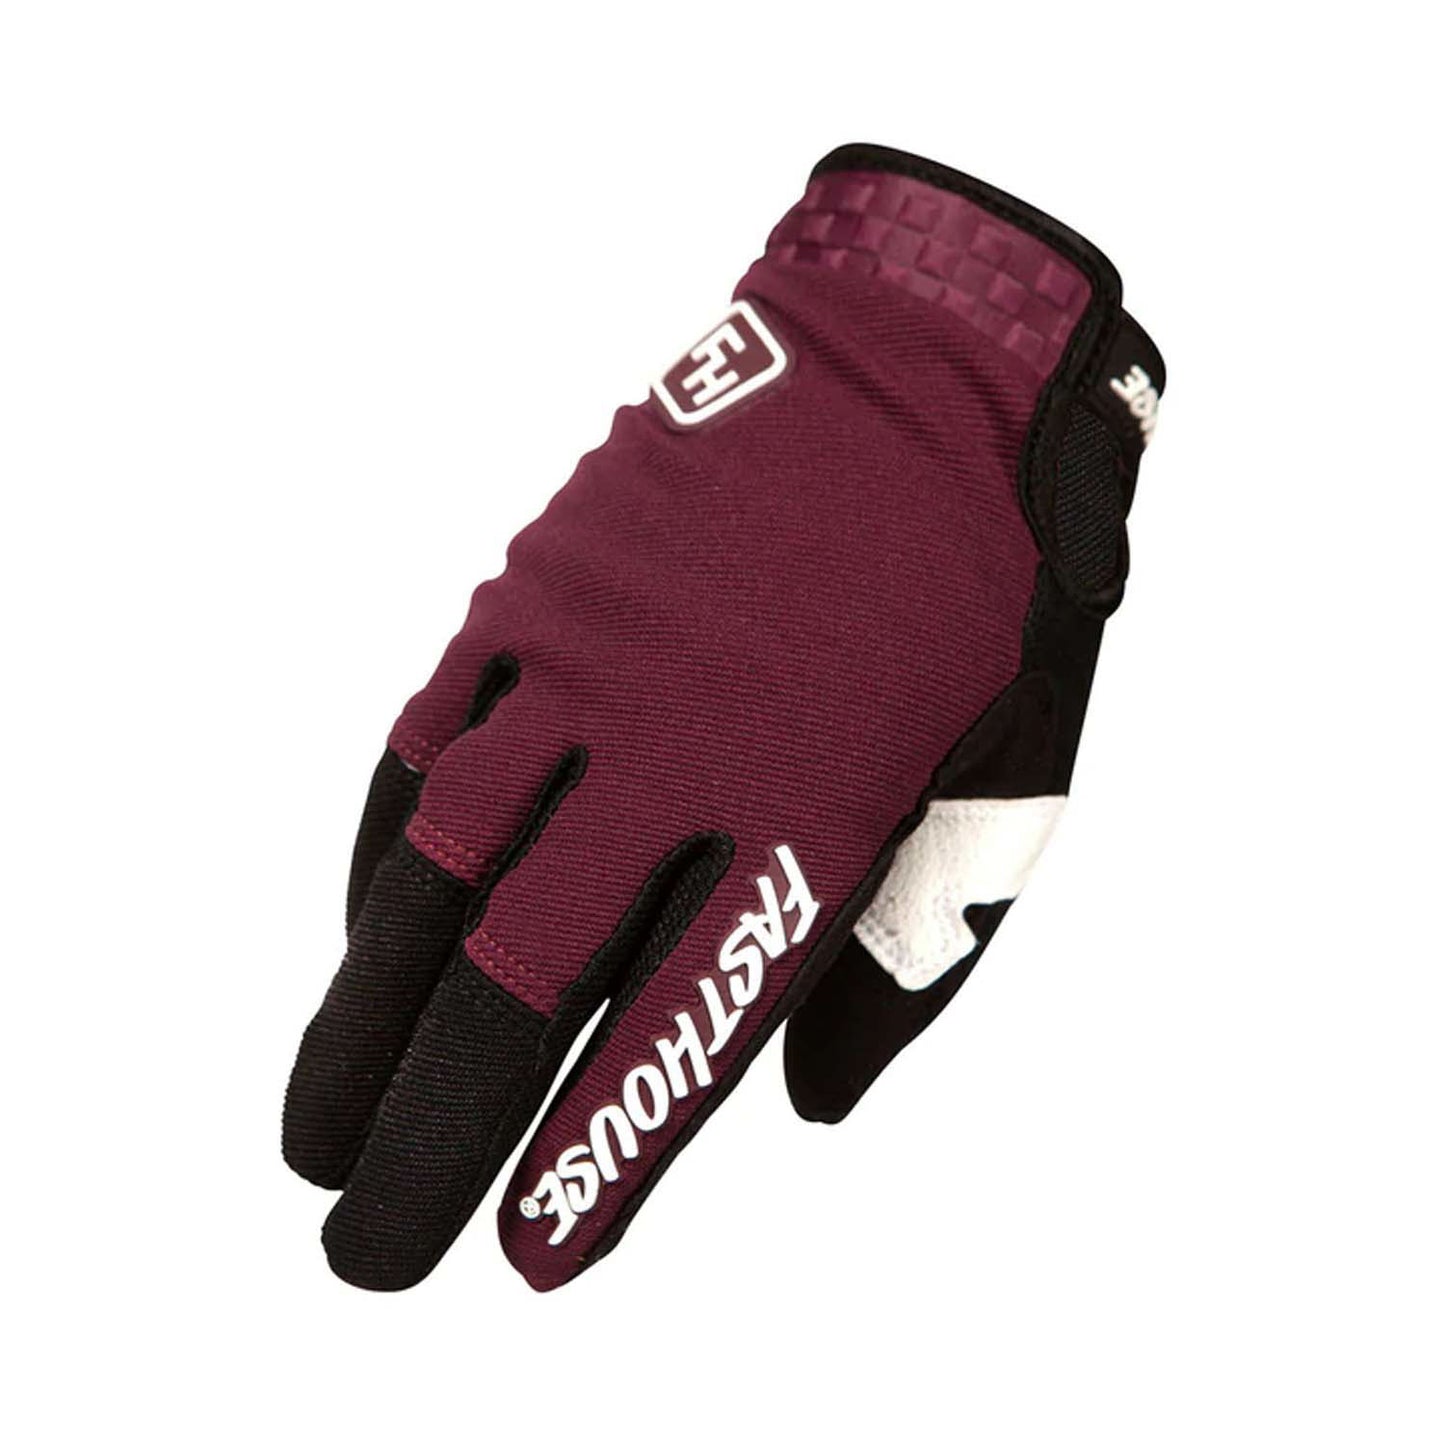 Fasthouse Youth Speed Style Glove Ridgeline - Maroon/Black Bike Gloves